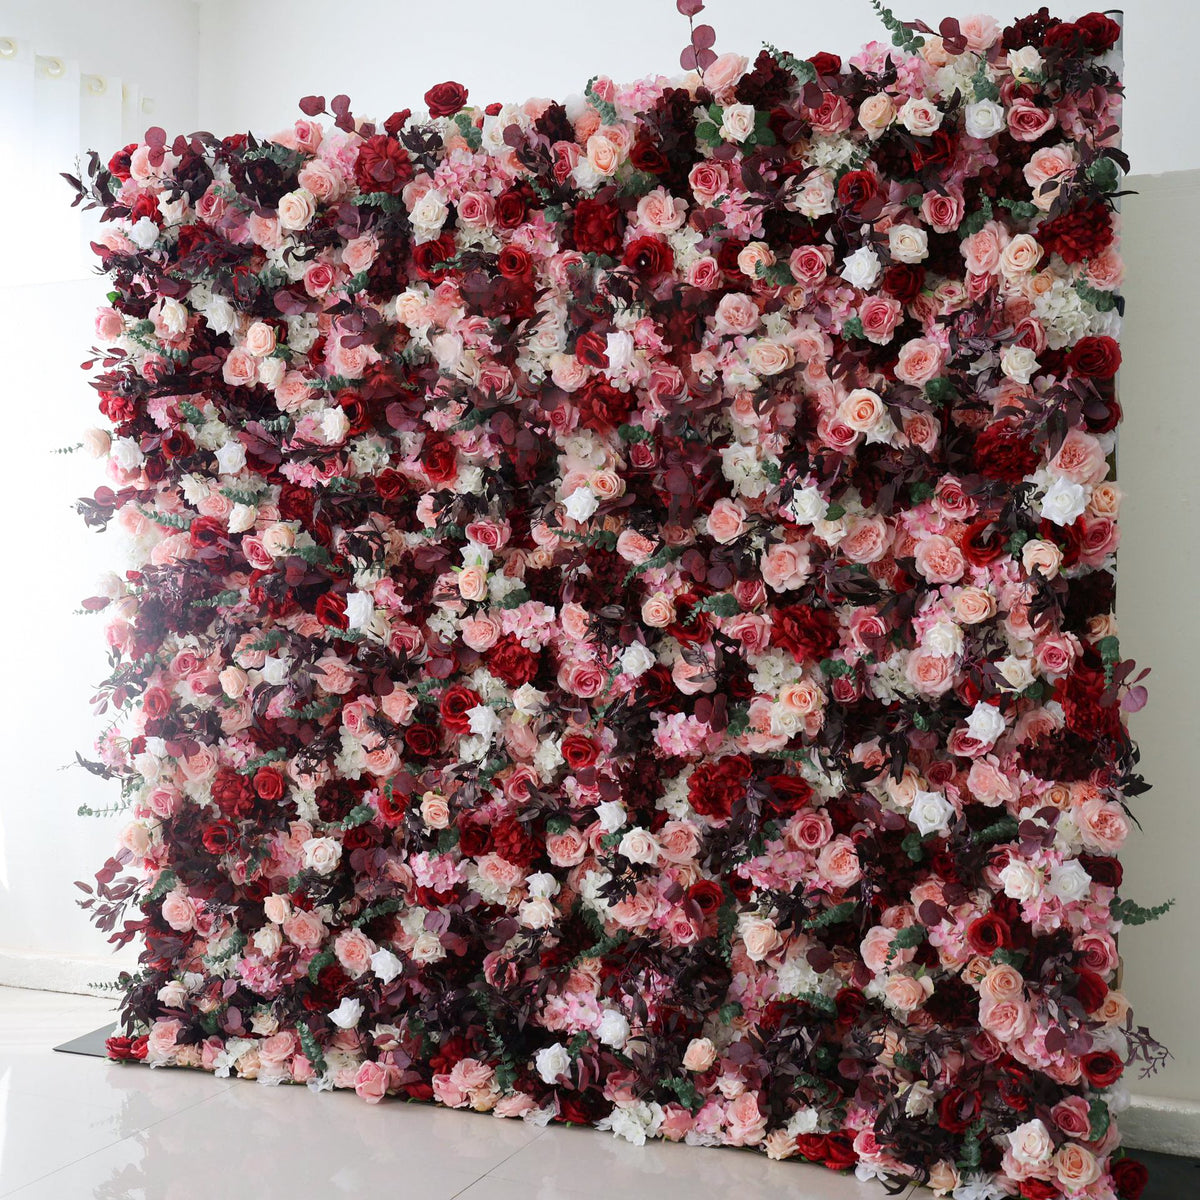 3D Artificial Flower Wall Arrangement Wedding Party Birthday Backdrop Decor HQ1324